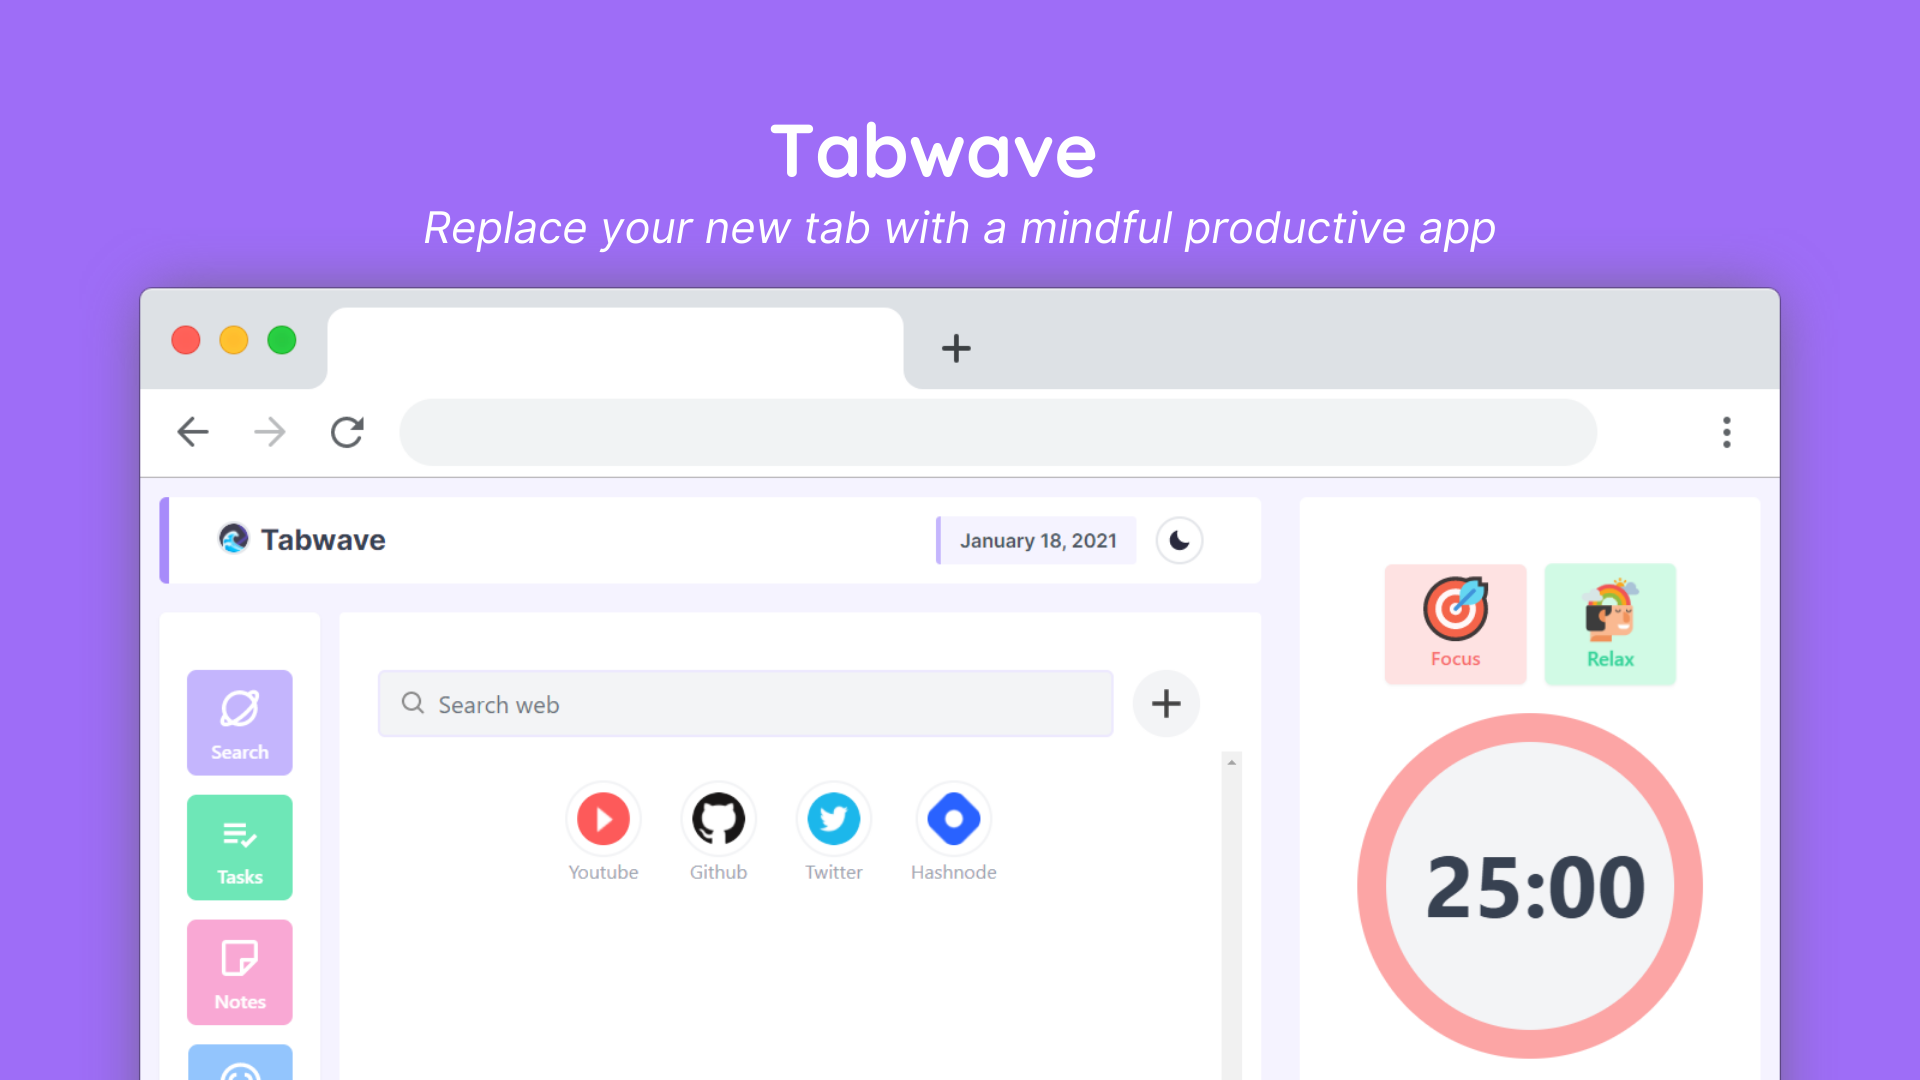 Find detailed information about Tabwave